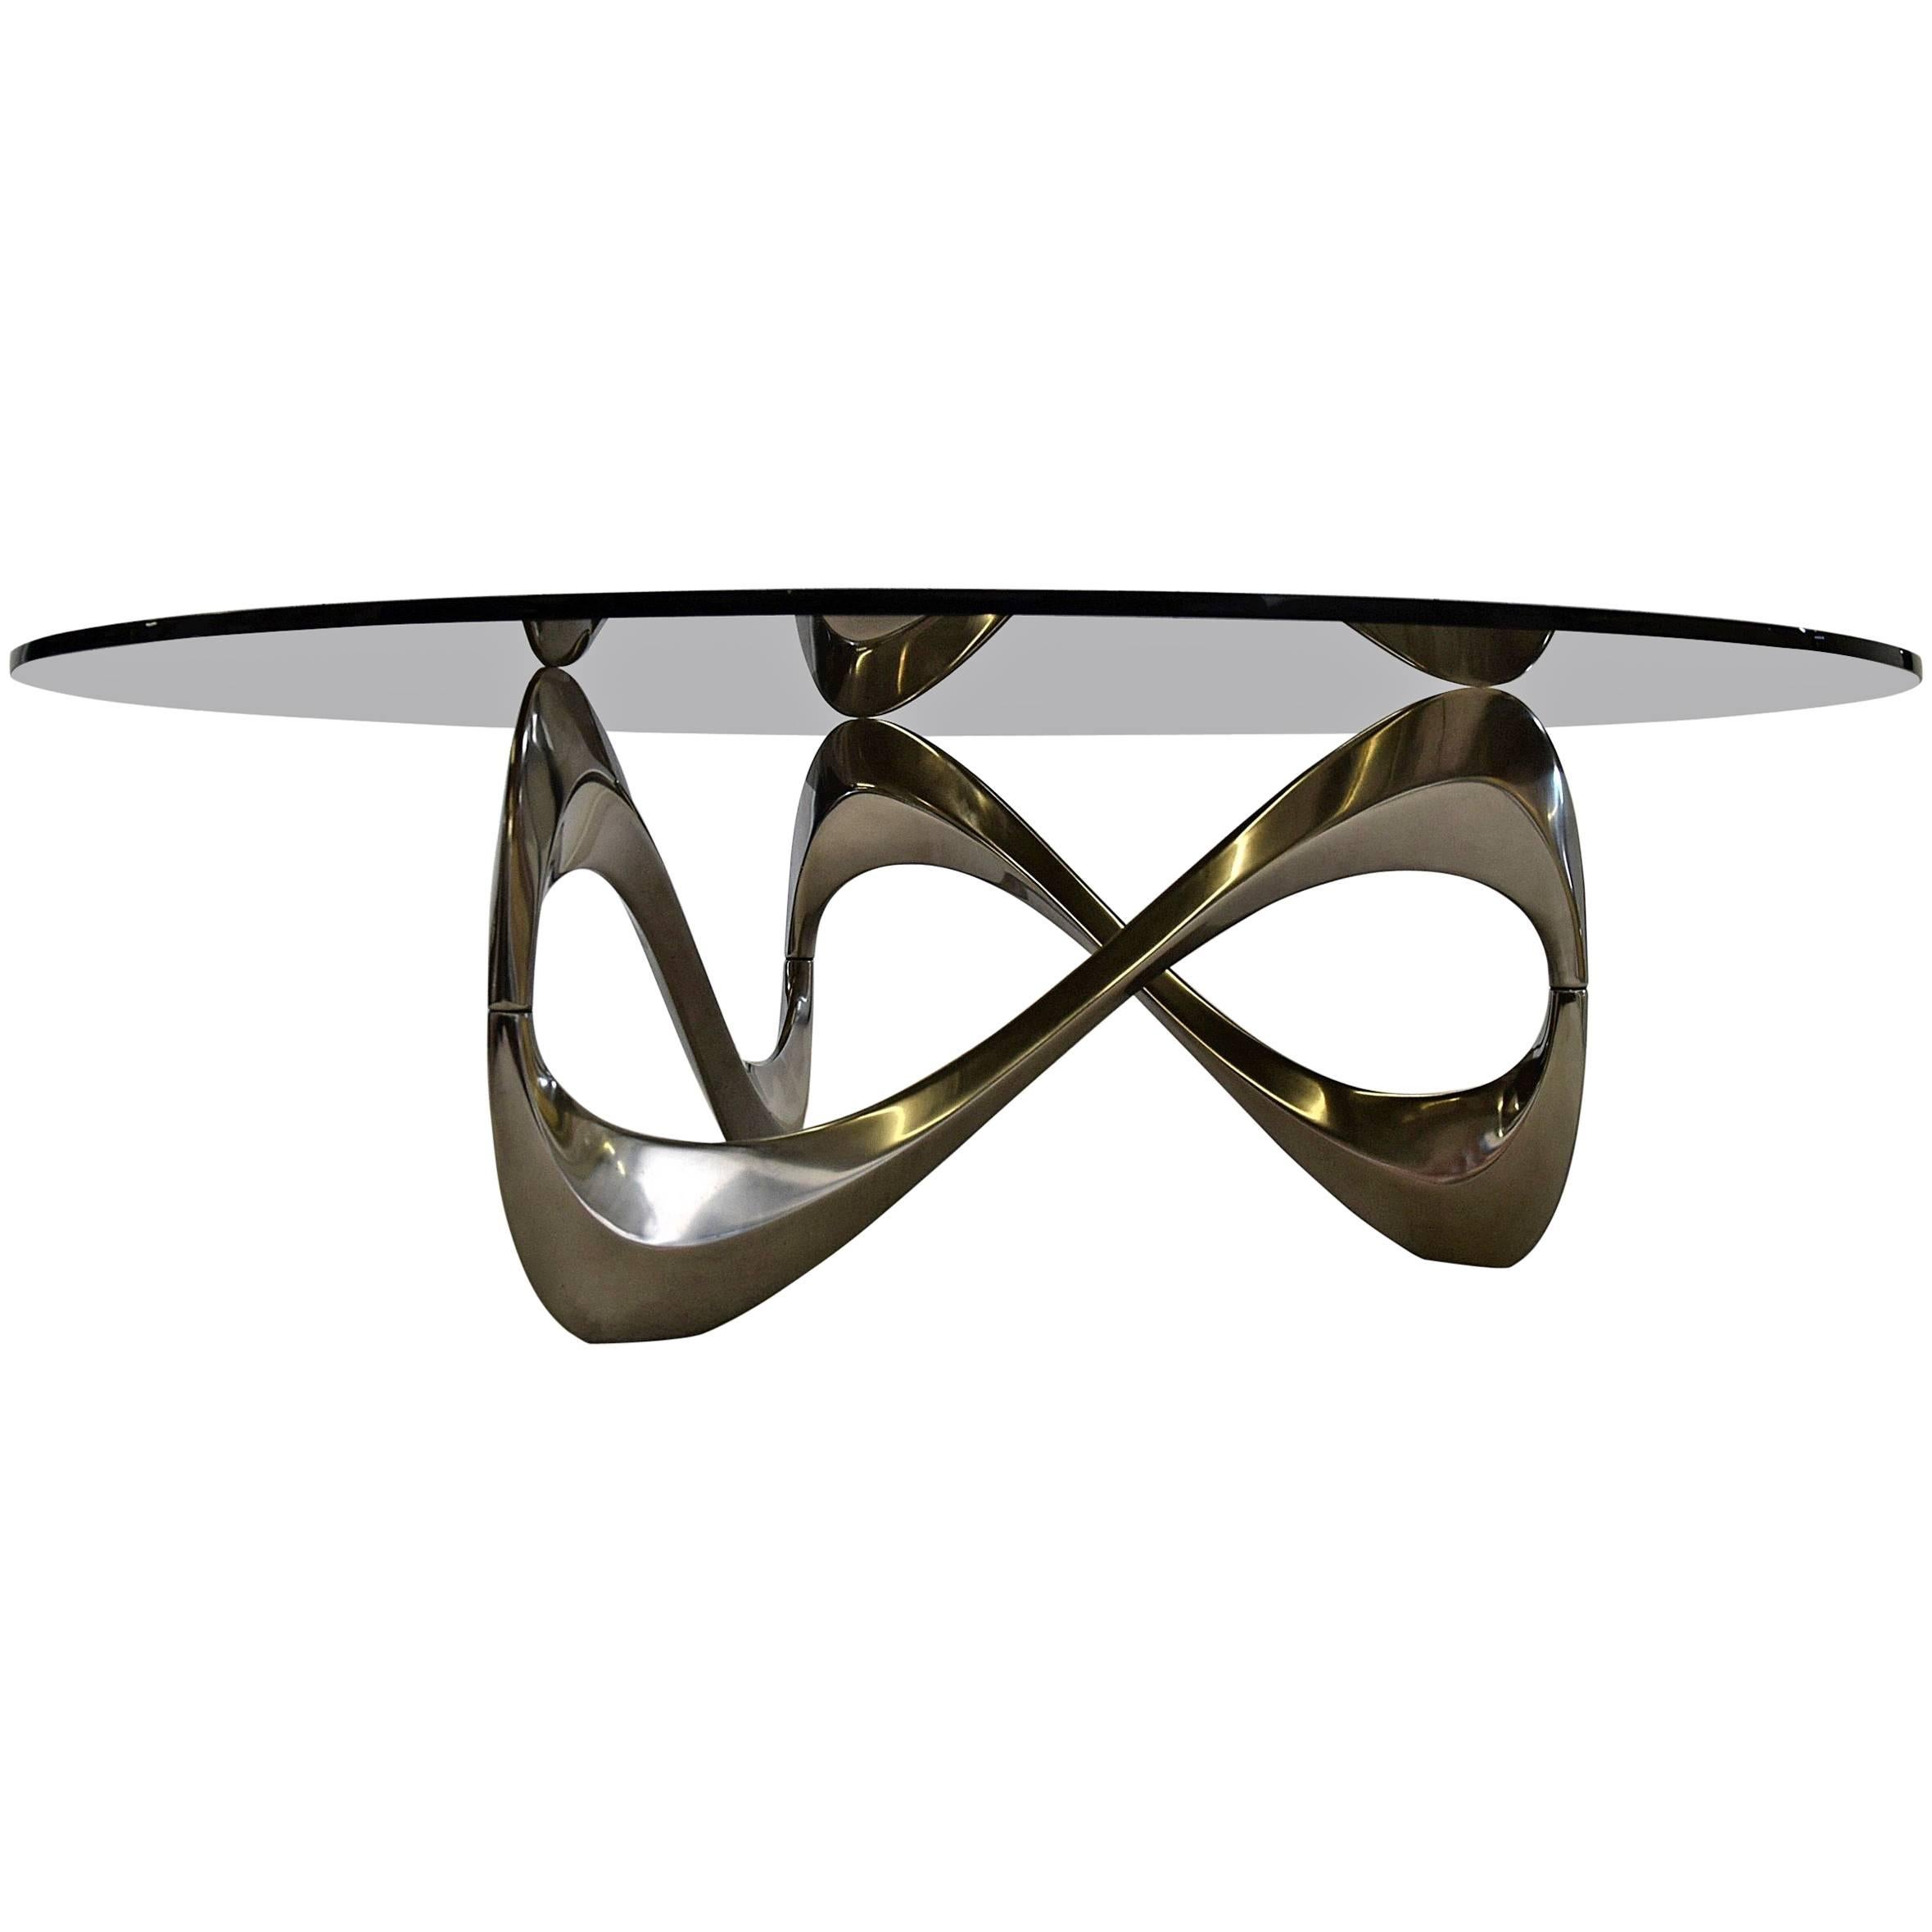 Knut Hesterberg Mid century Modern Snake Table for Ronald Schmitt